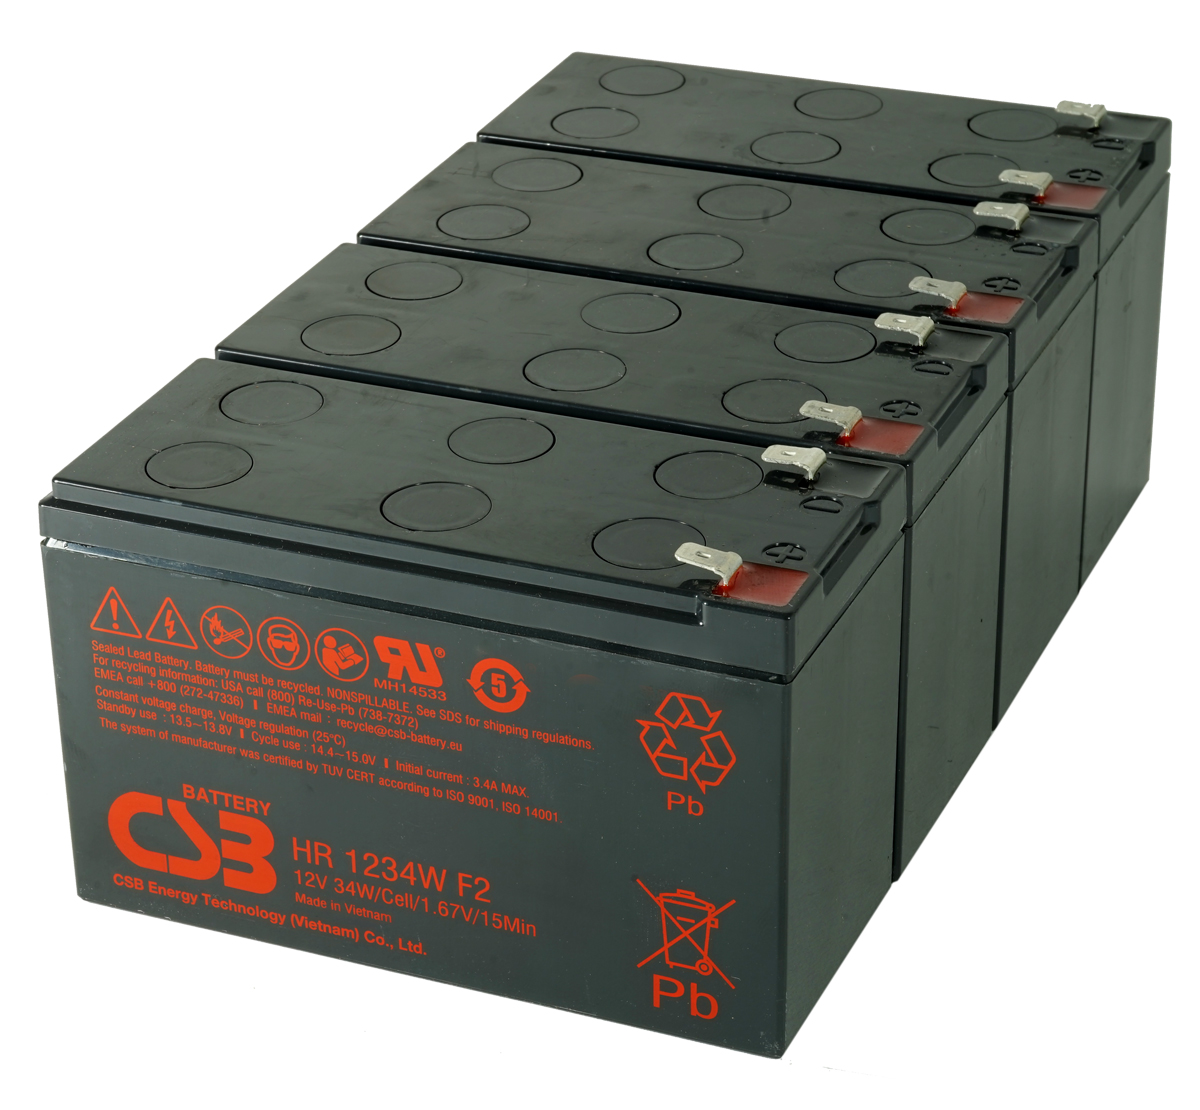 MDSV209 UPS Battery Kit - Replaces APC RBCV209